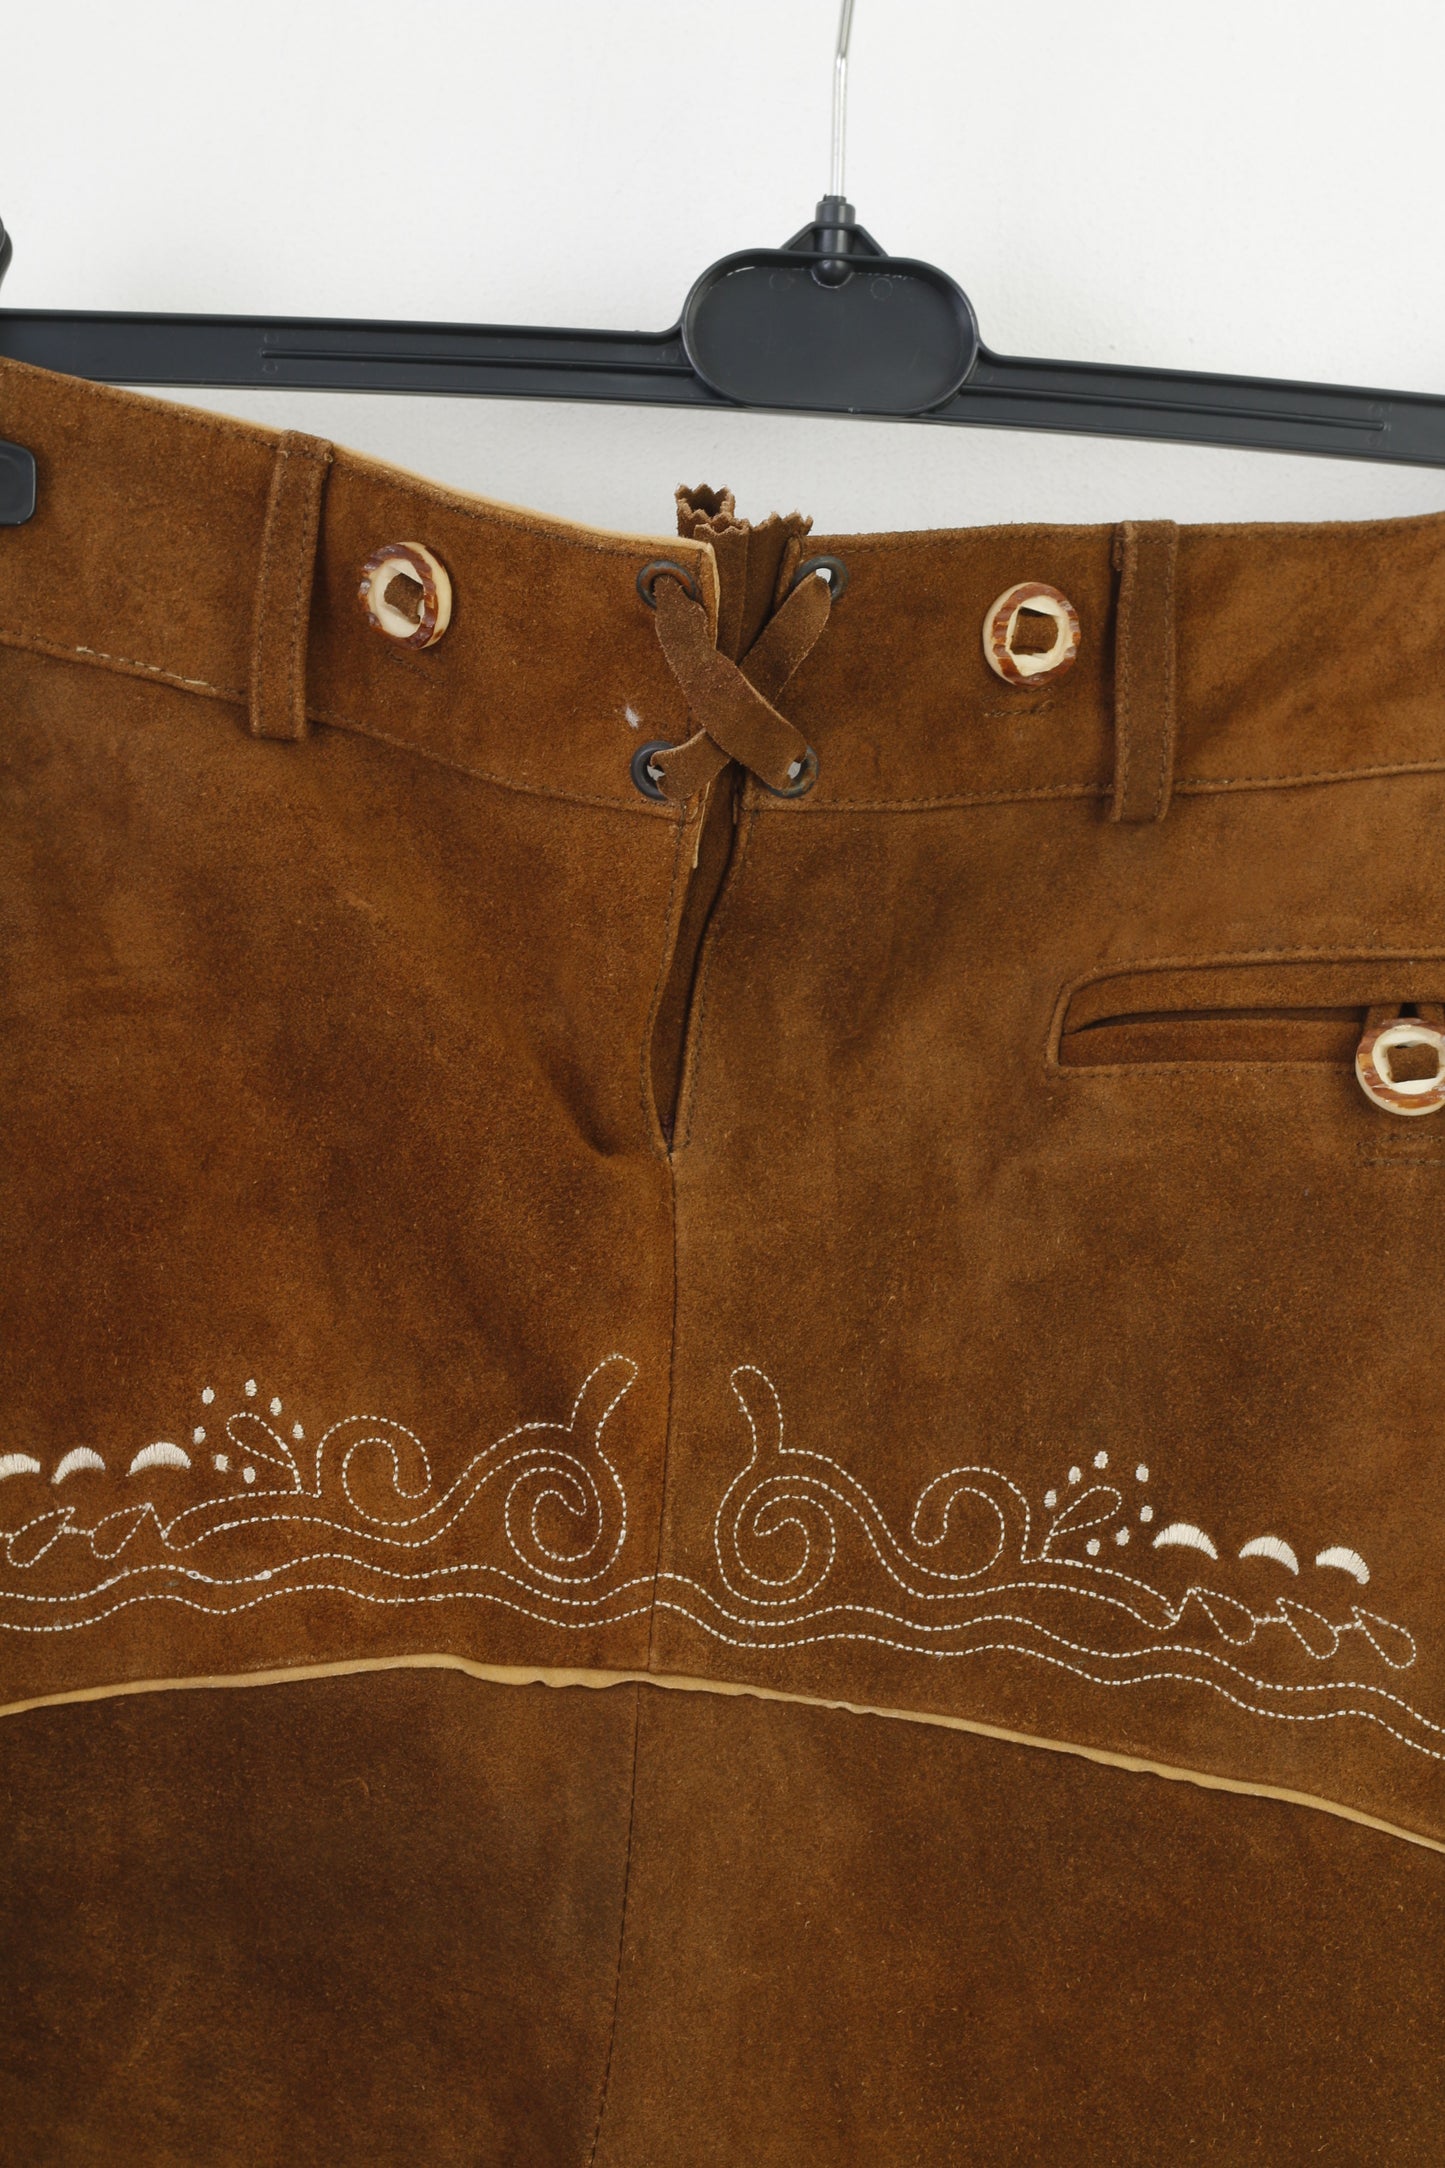 Lederversand Uomo 60 Pantaloni in pelle Marrone Vintage Tirolo Austria Trachten Western Cowboy Tradizionali tasche con fondo ricamato